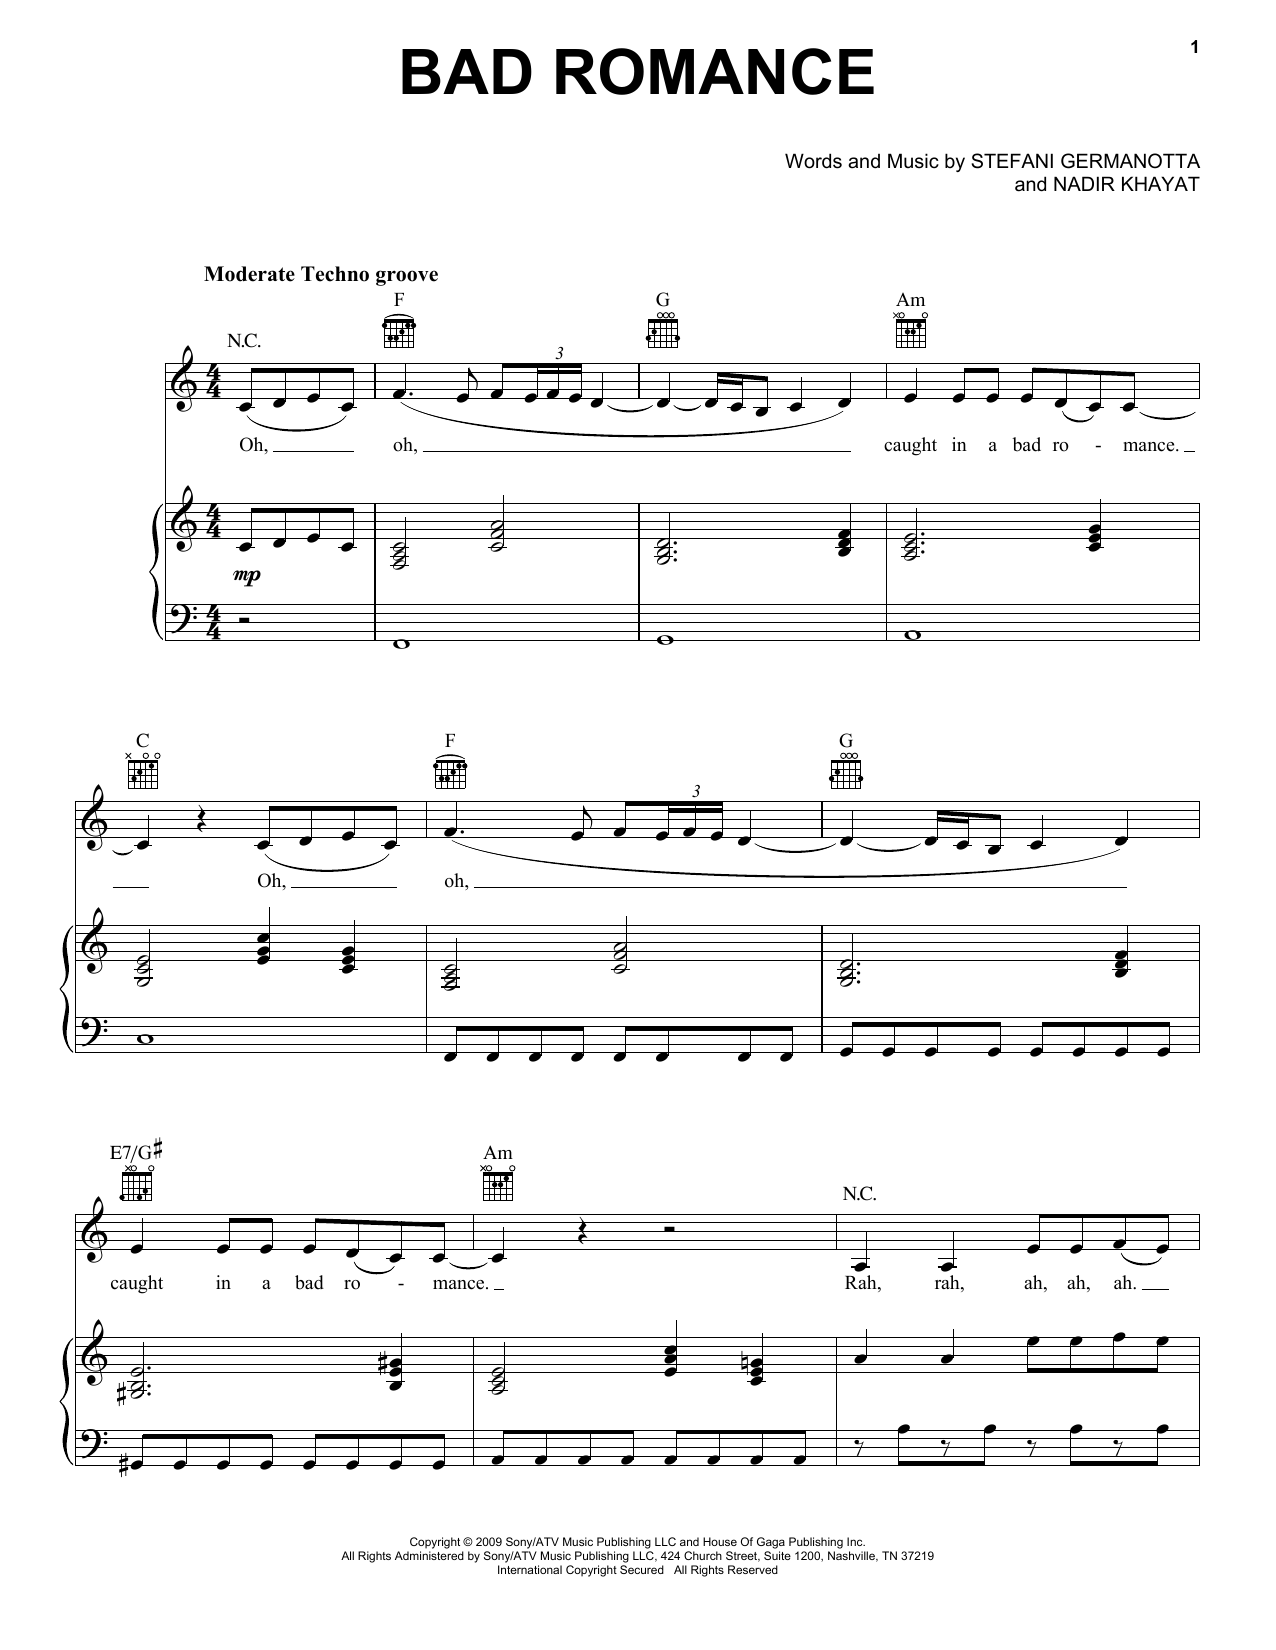 Lady Gaga Bad Romance Sheet Music Notes & Chords for Violin - Download or Print PDF